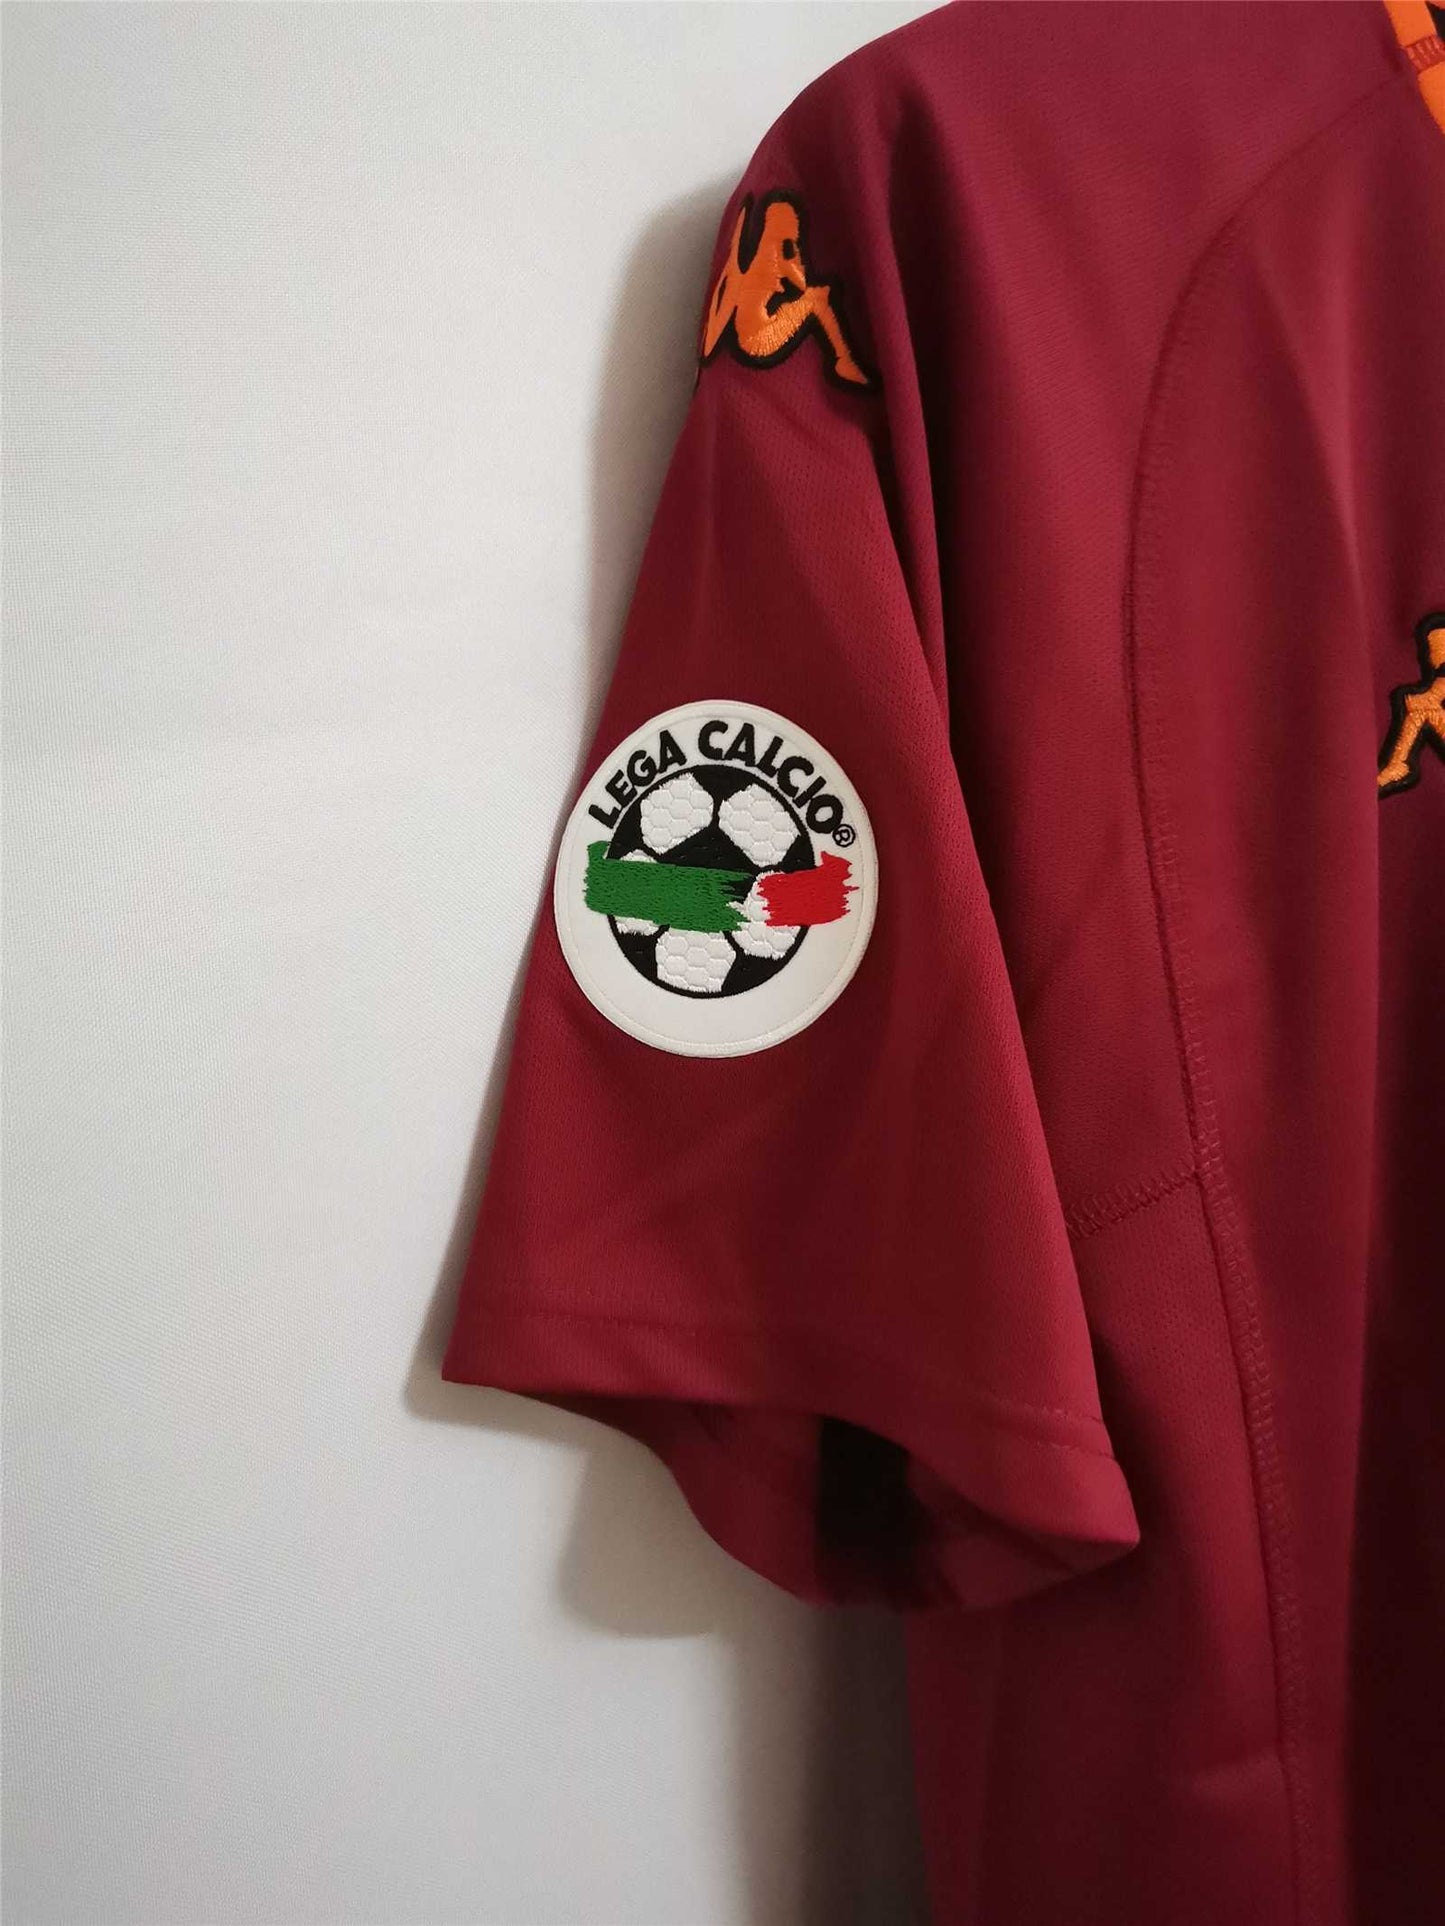 AS Roma 00-01 Home Shirt